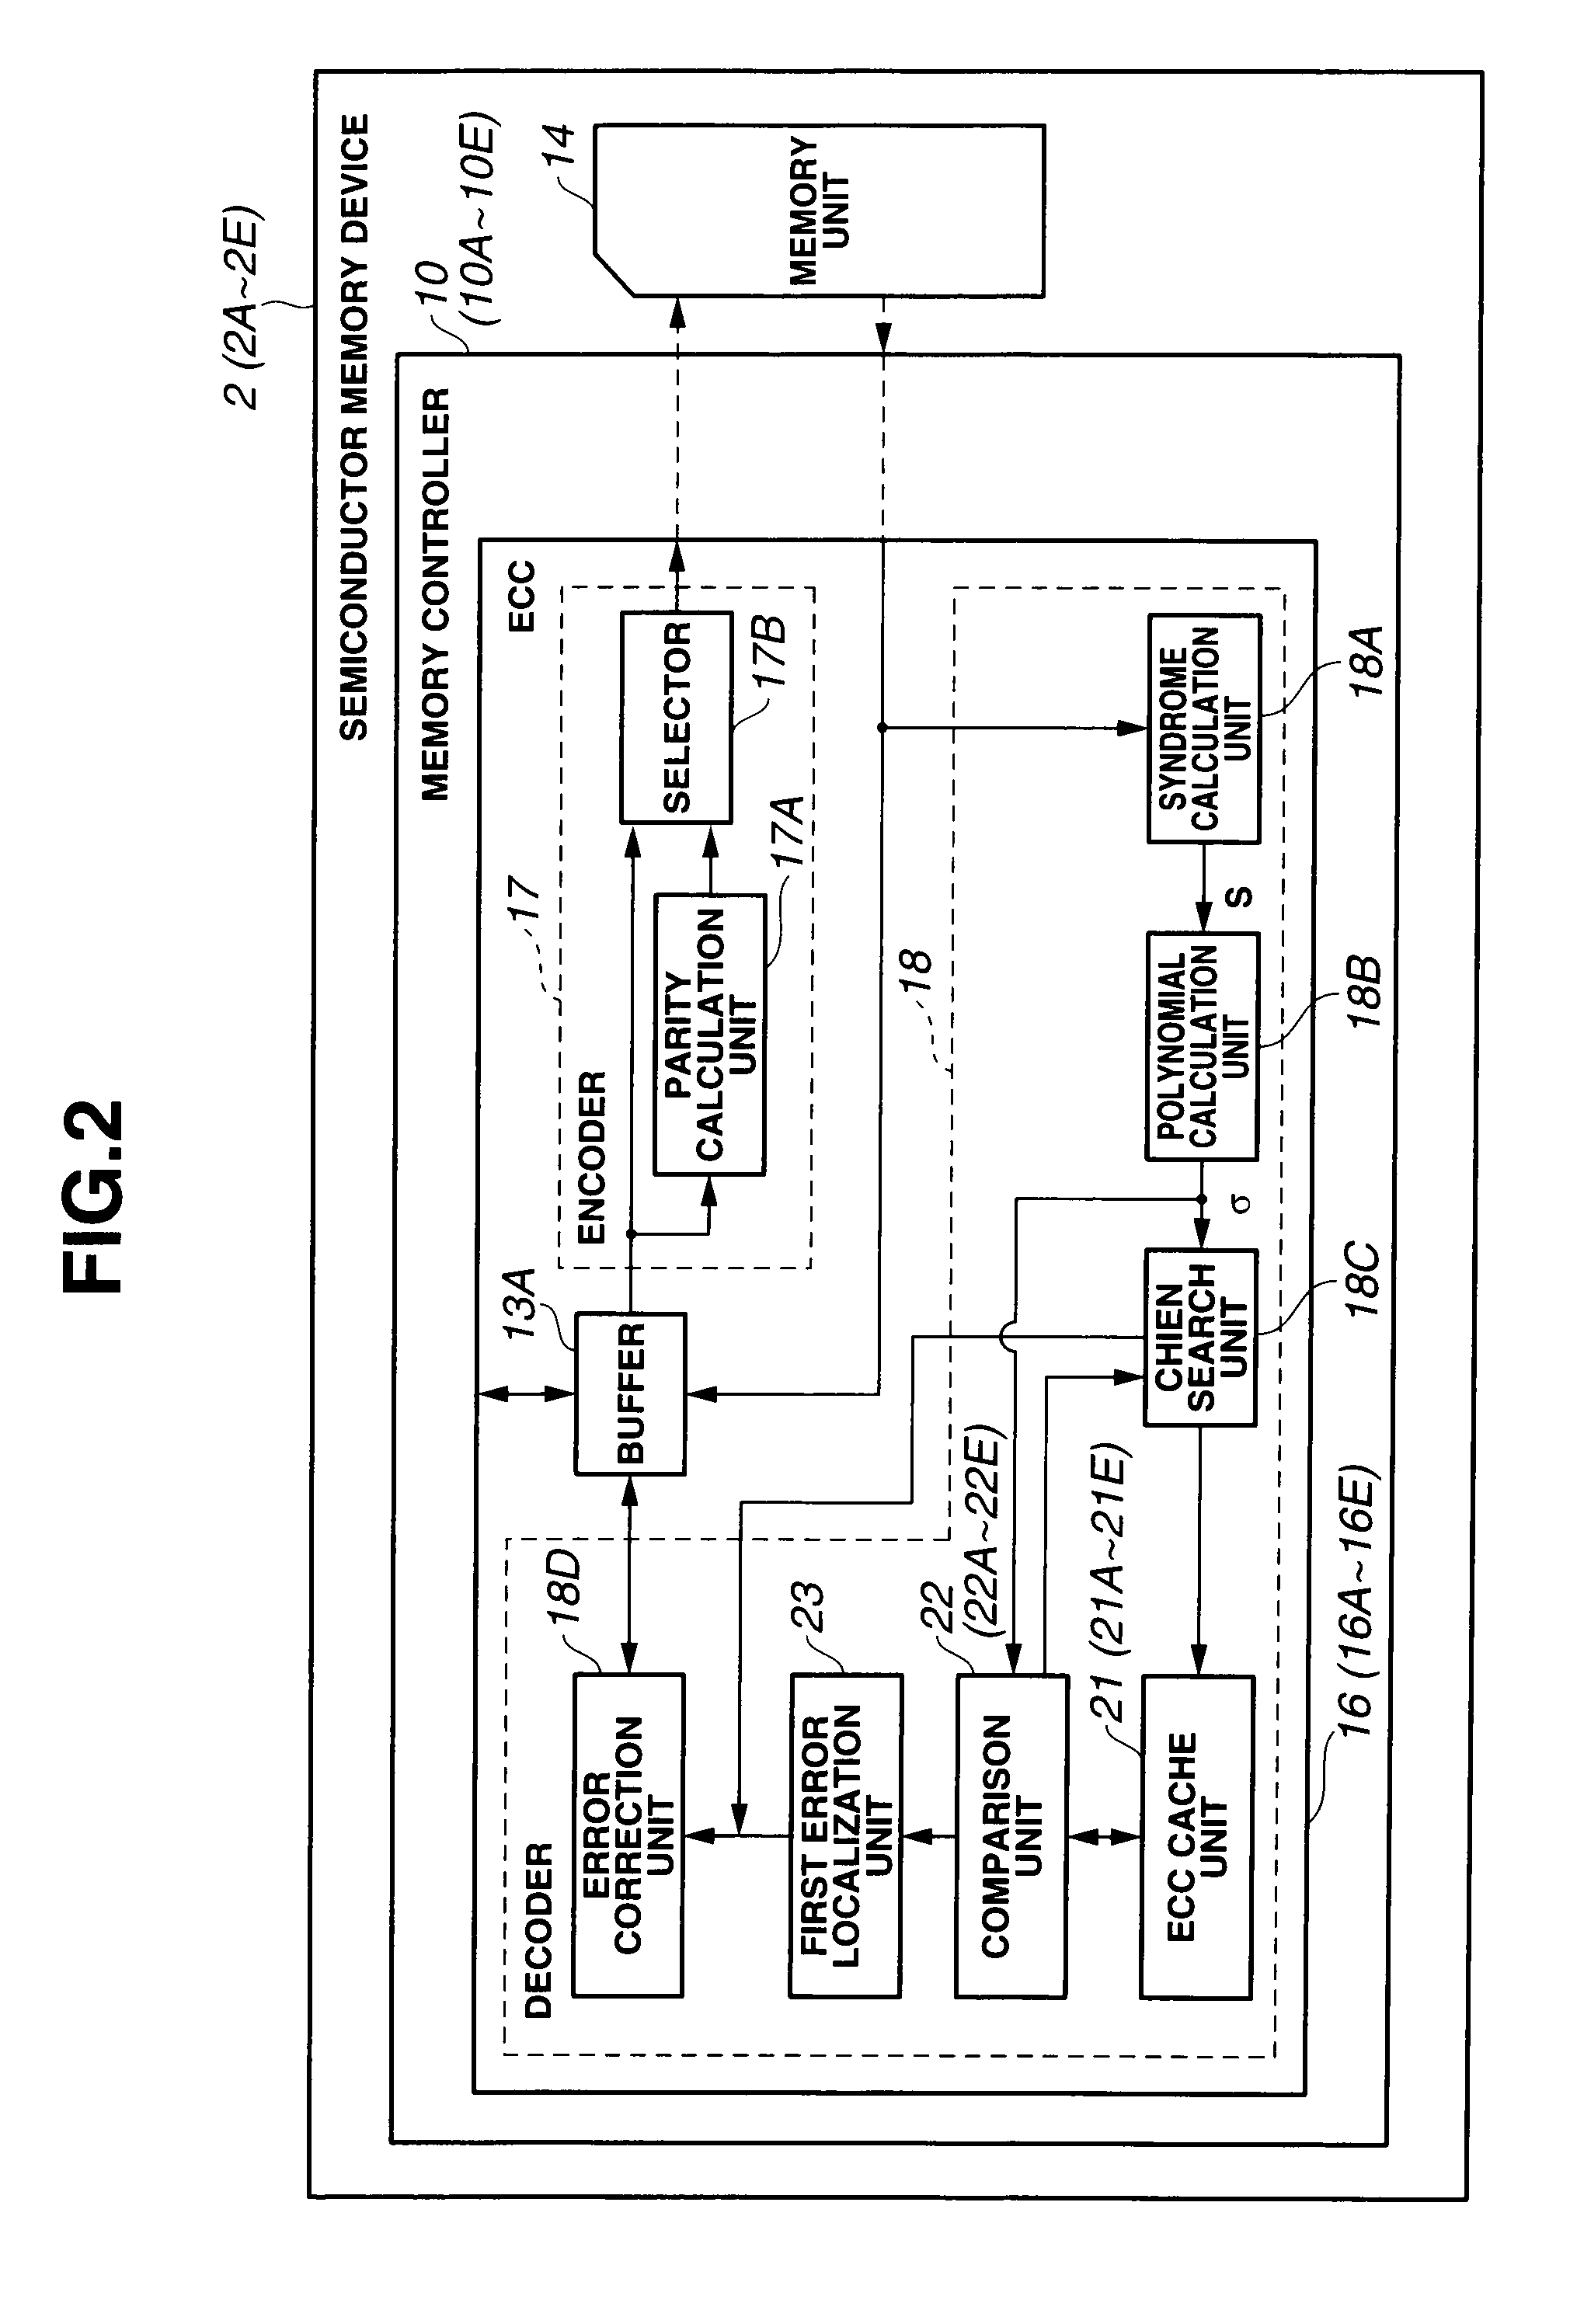 Error detector/corrector, memory controller, and semiconductor memory device